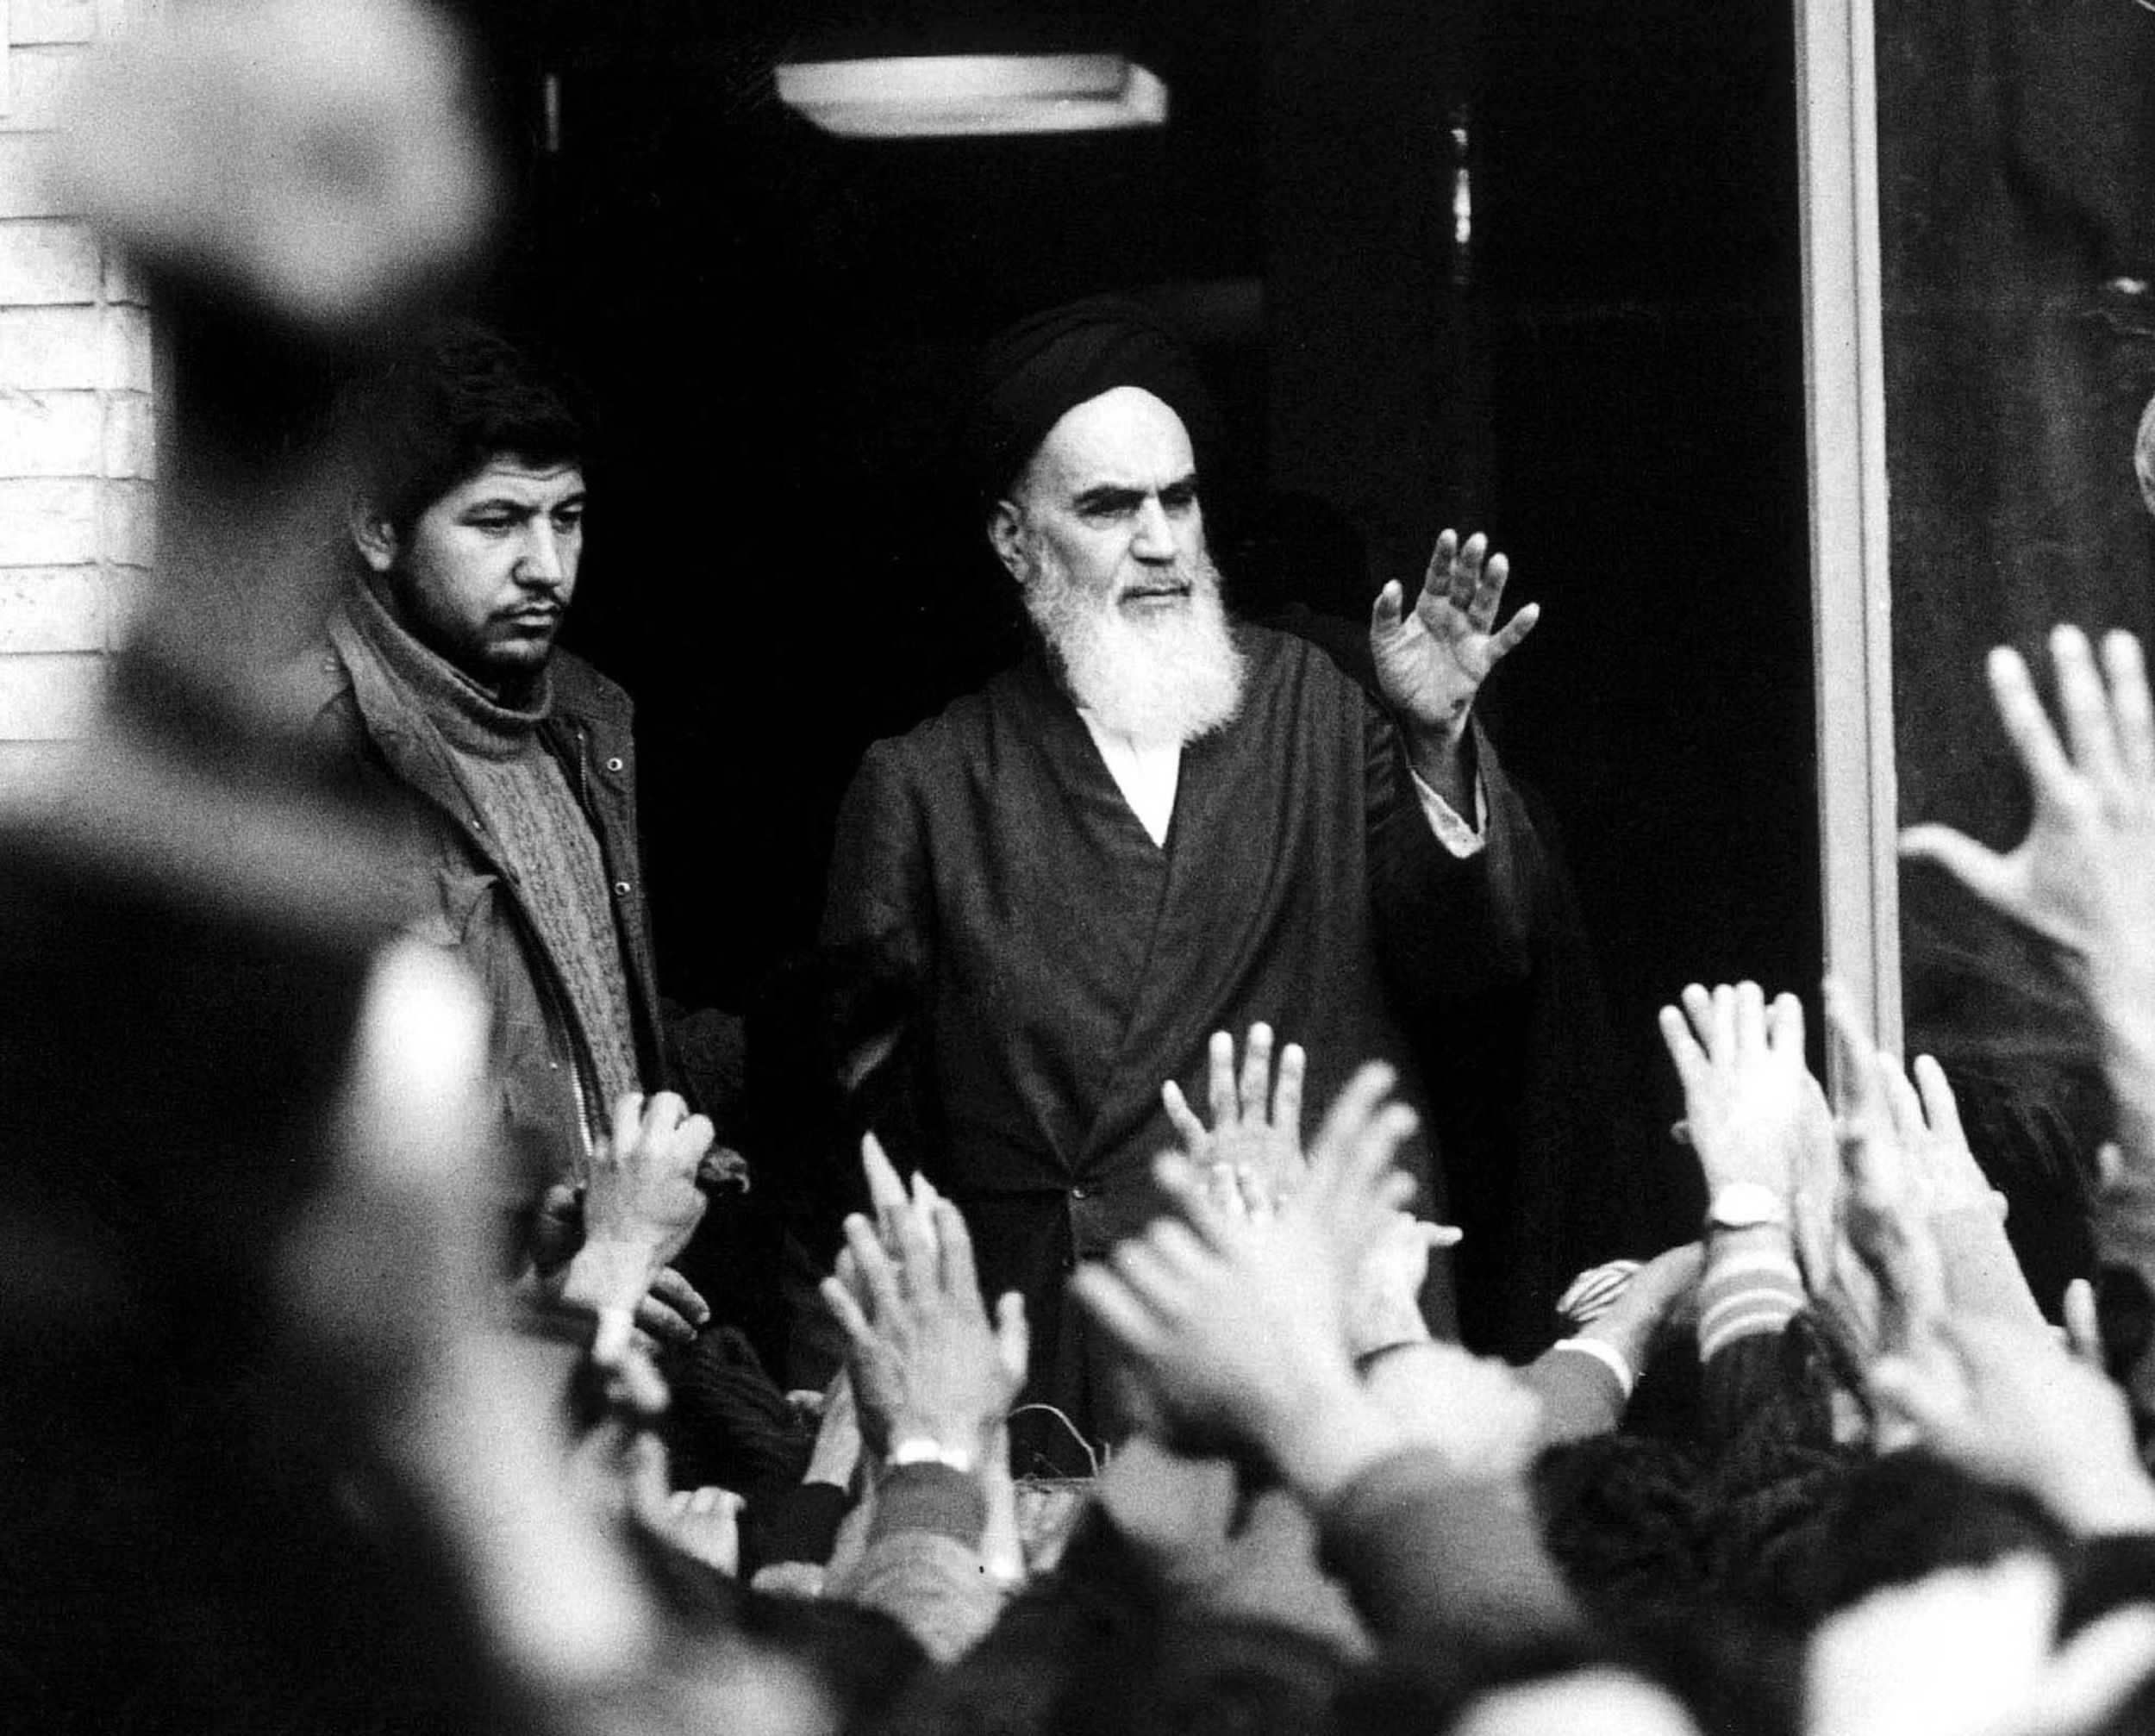 Iran: Revolutionary Contradictions